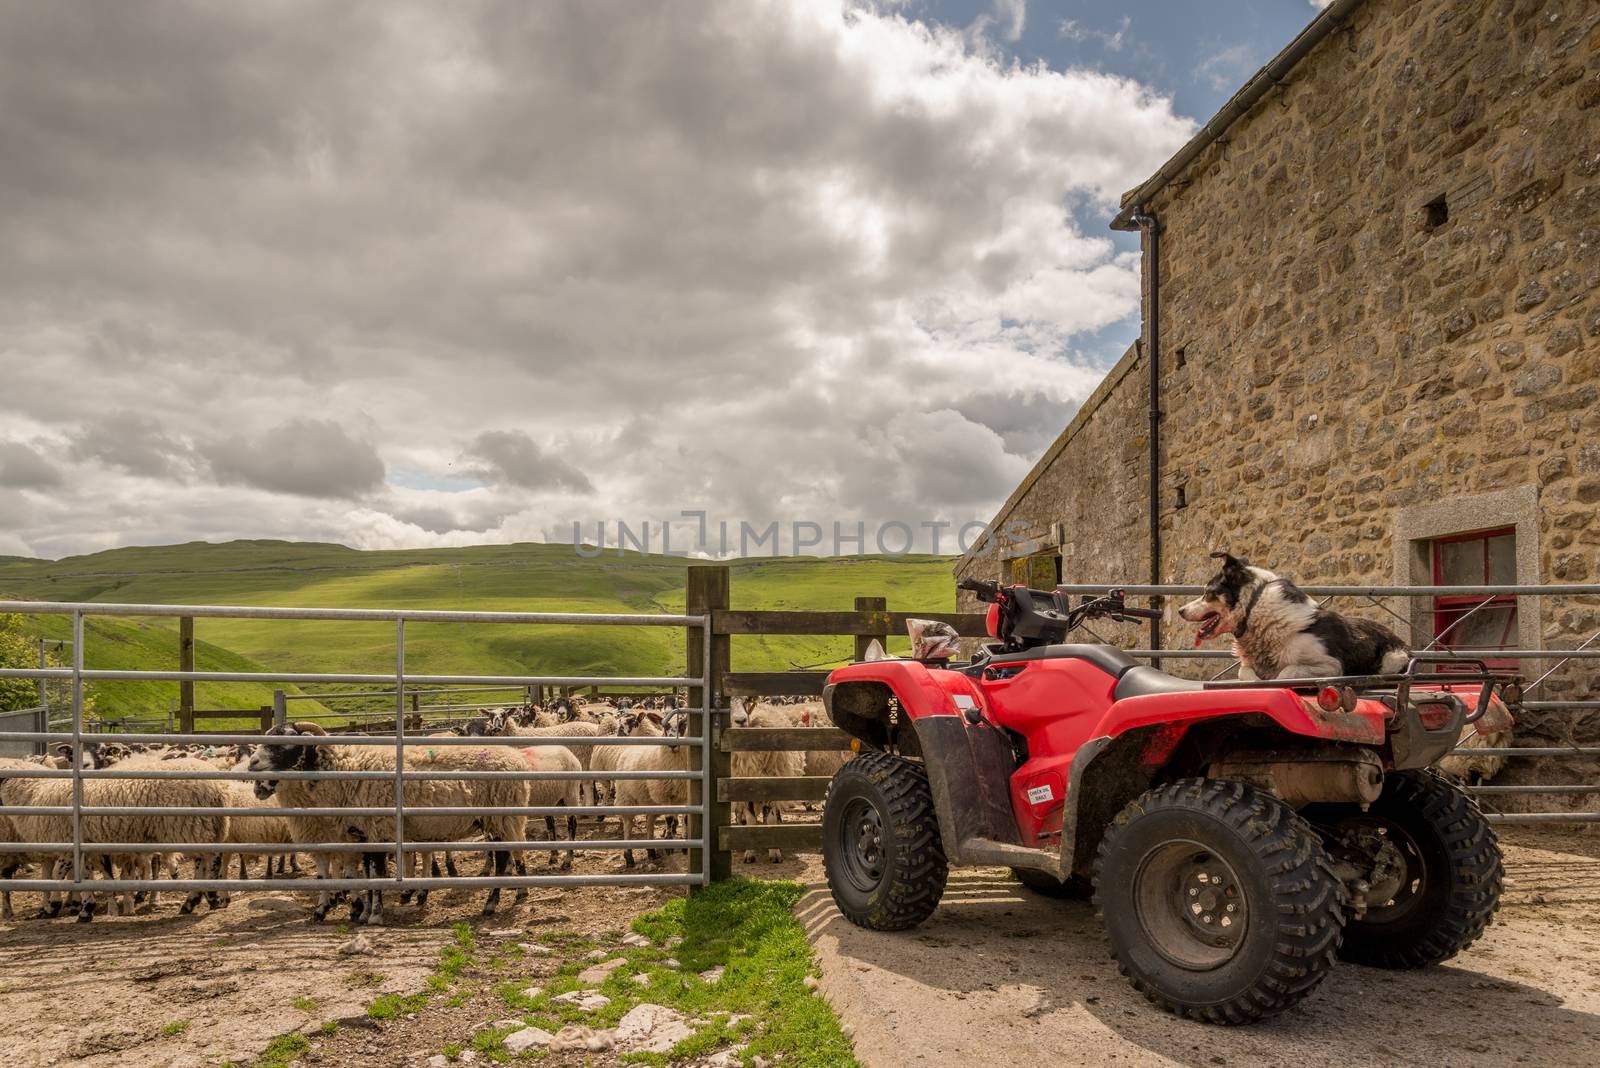 Sheepdog watching sheep on quad bike by pomemick